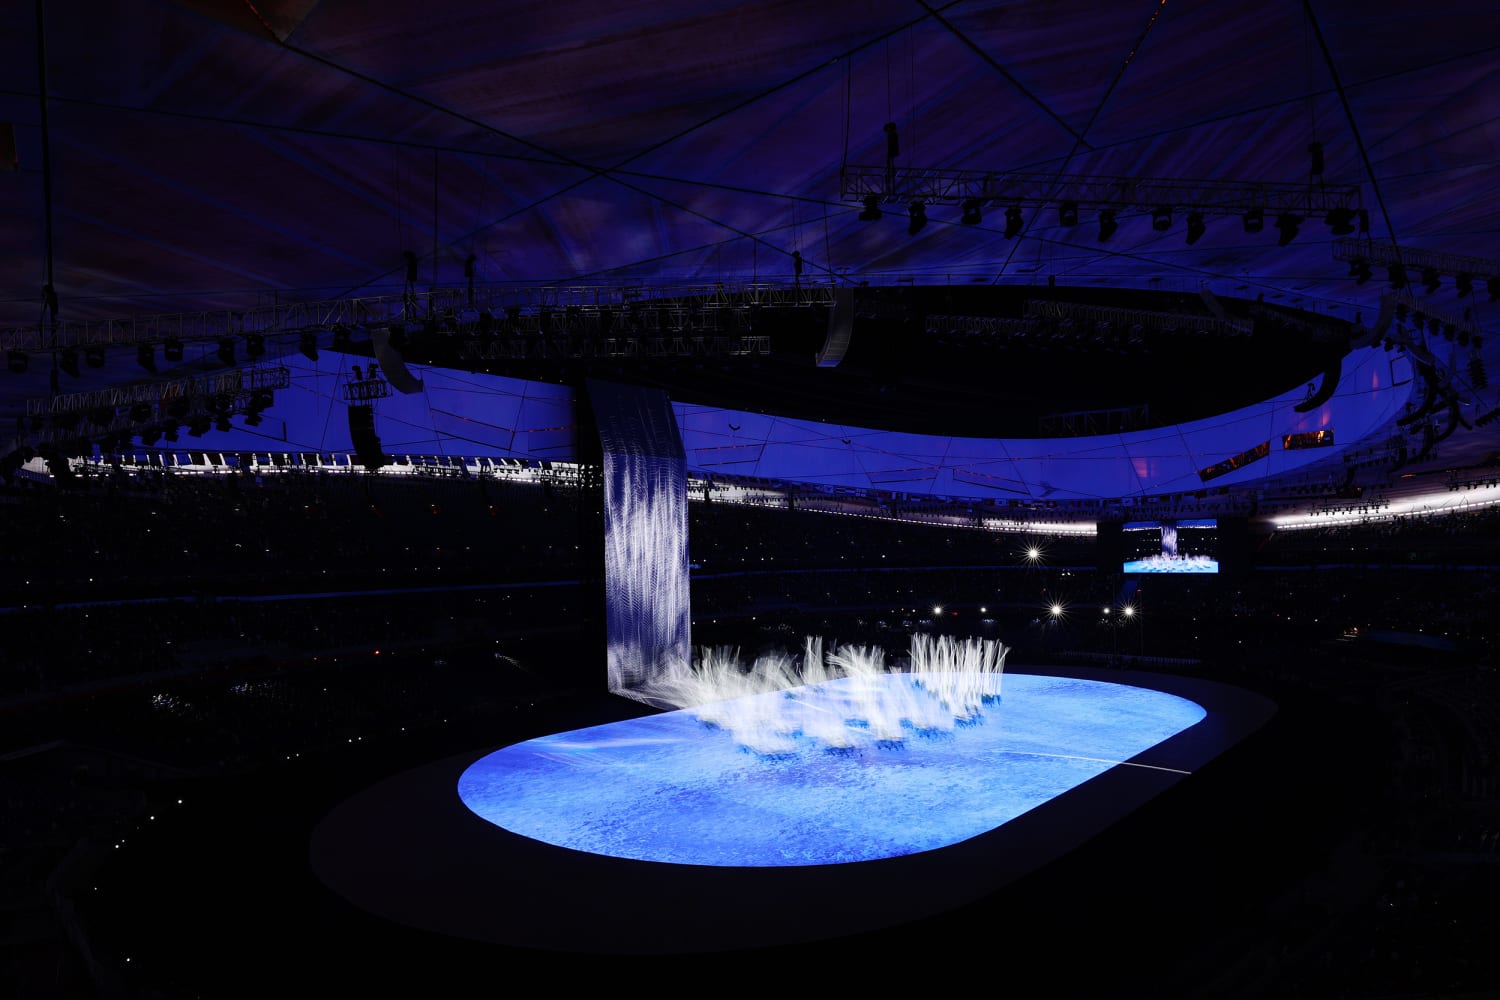 The Olympics opening ceremony in Beijing